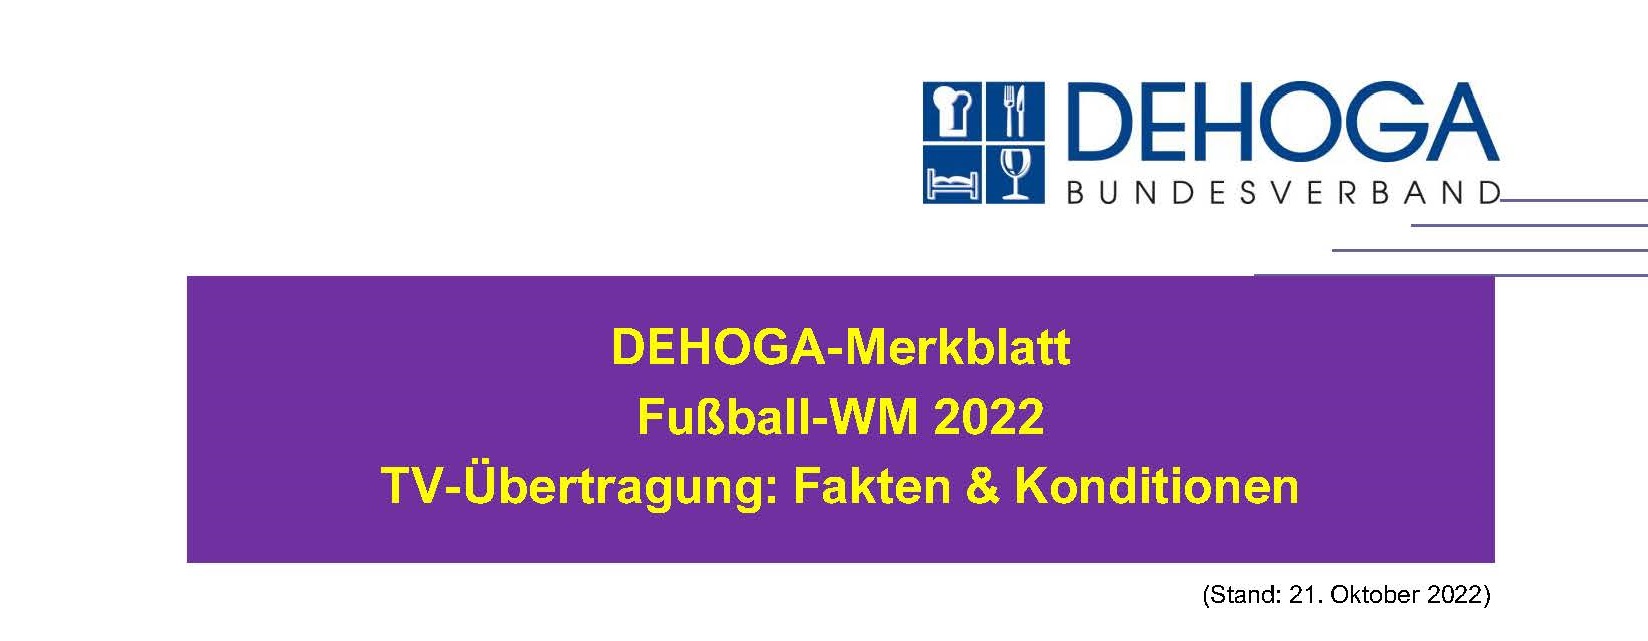 DEHOGA Shop DEHOGA-Merkblatt Fußball-WM 2022 PDF online kaufen